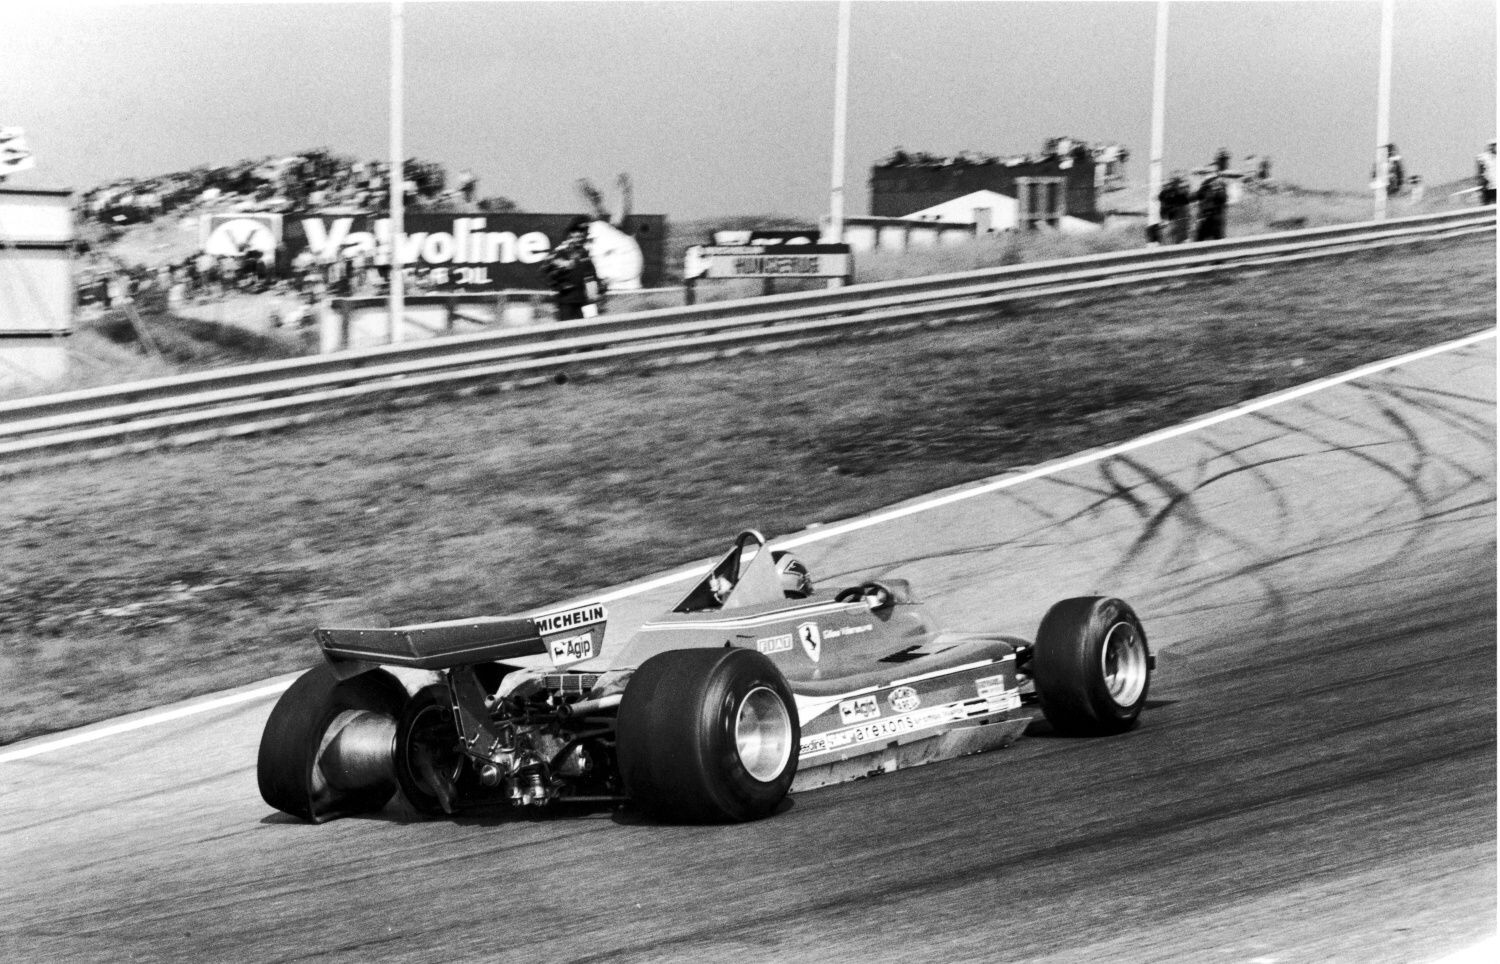 F1, VC Nizozemska 1979 (Zandvoort): Gilles Villeneuve, Ferrari